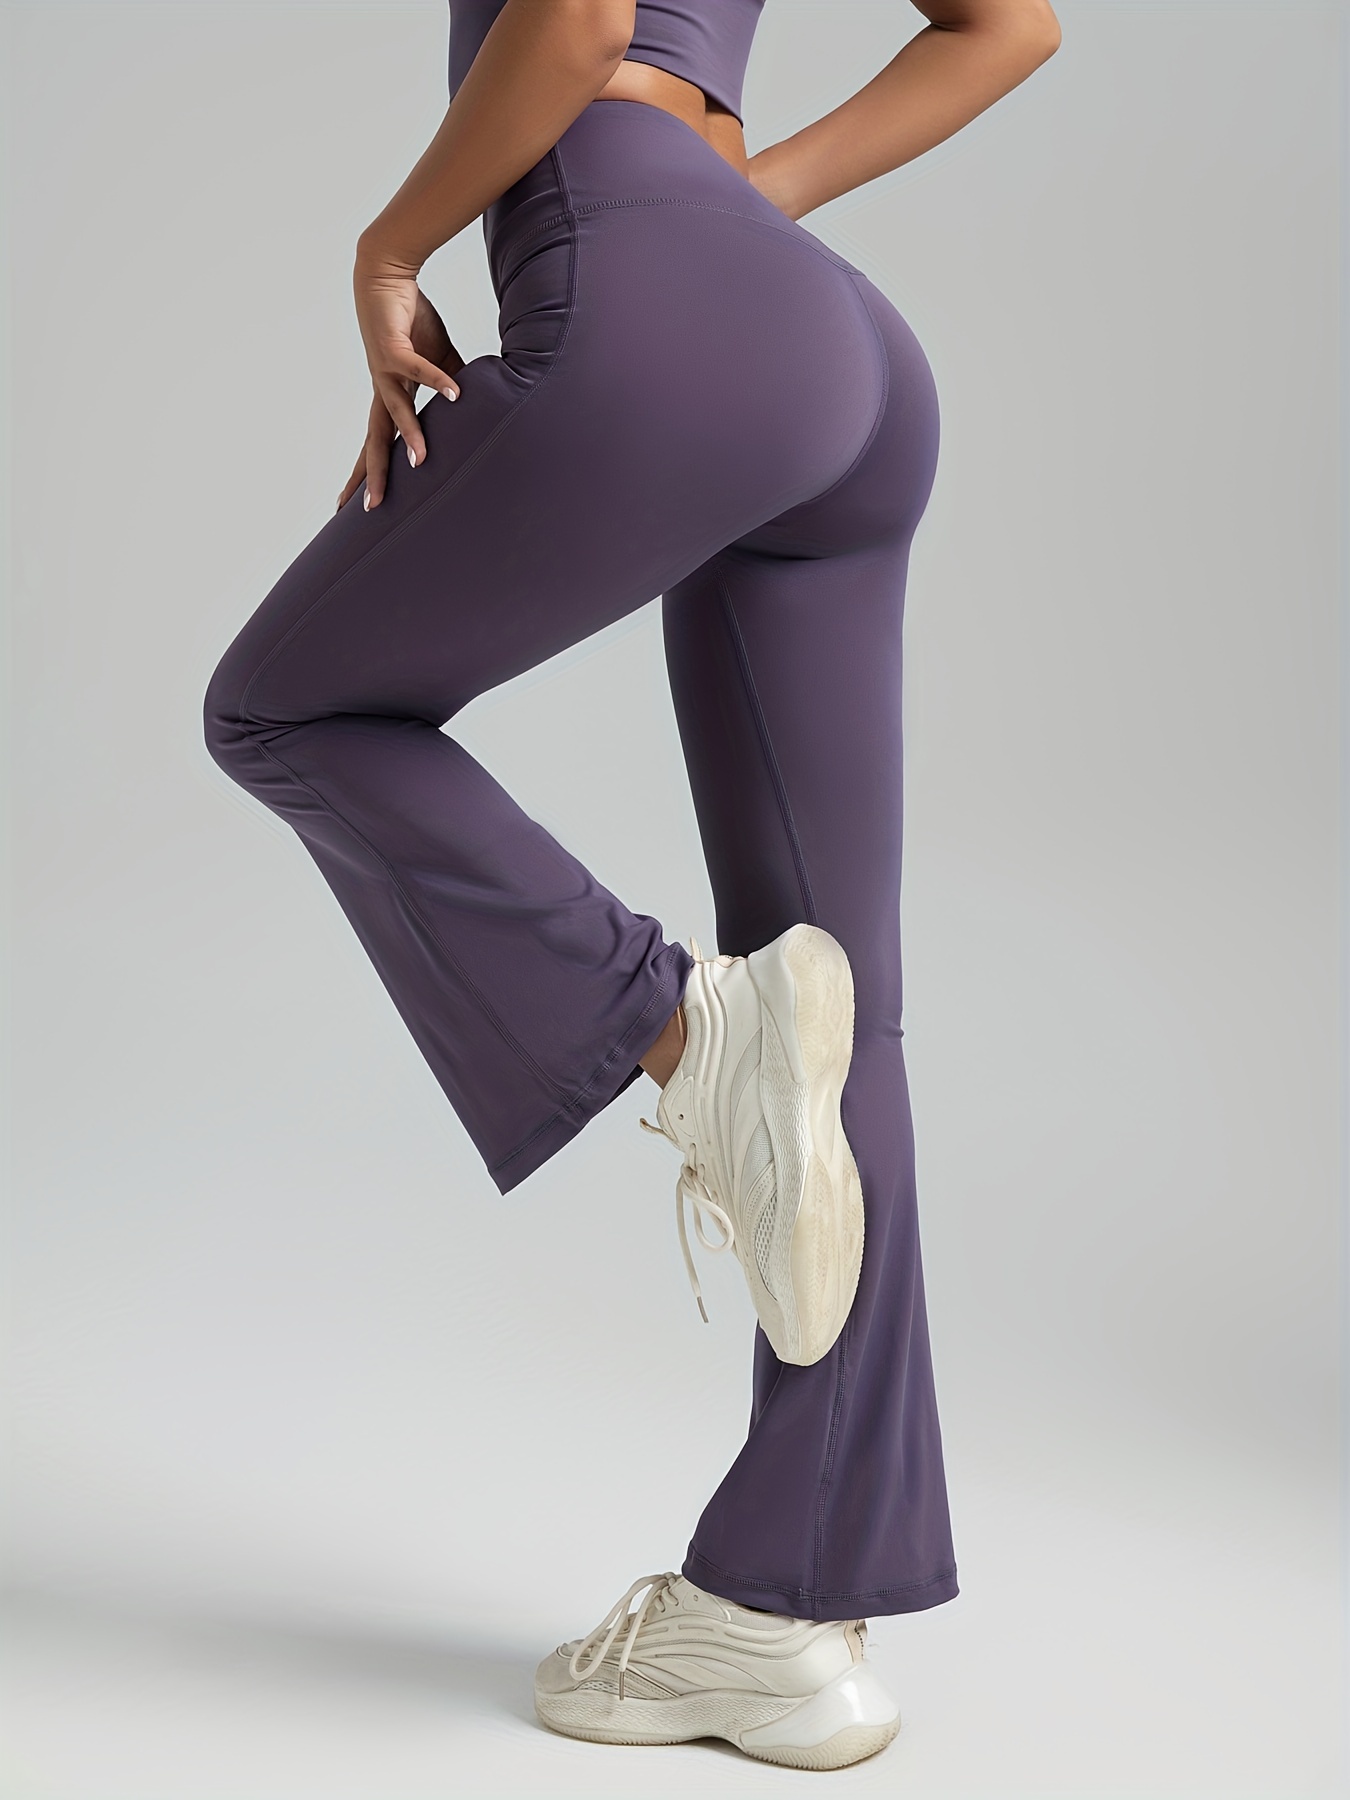 Lilac Leggings Flared, Women's Yoga Leggings, Womens Leggings High